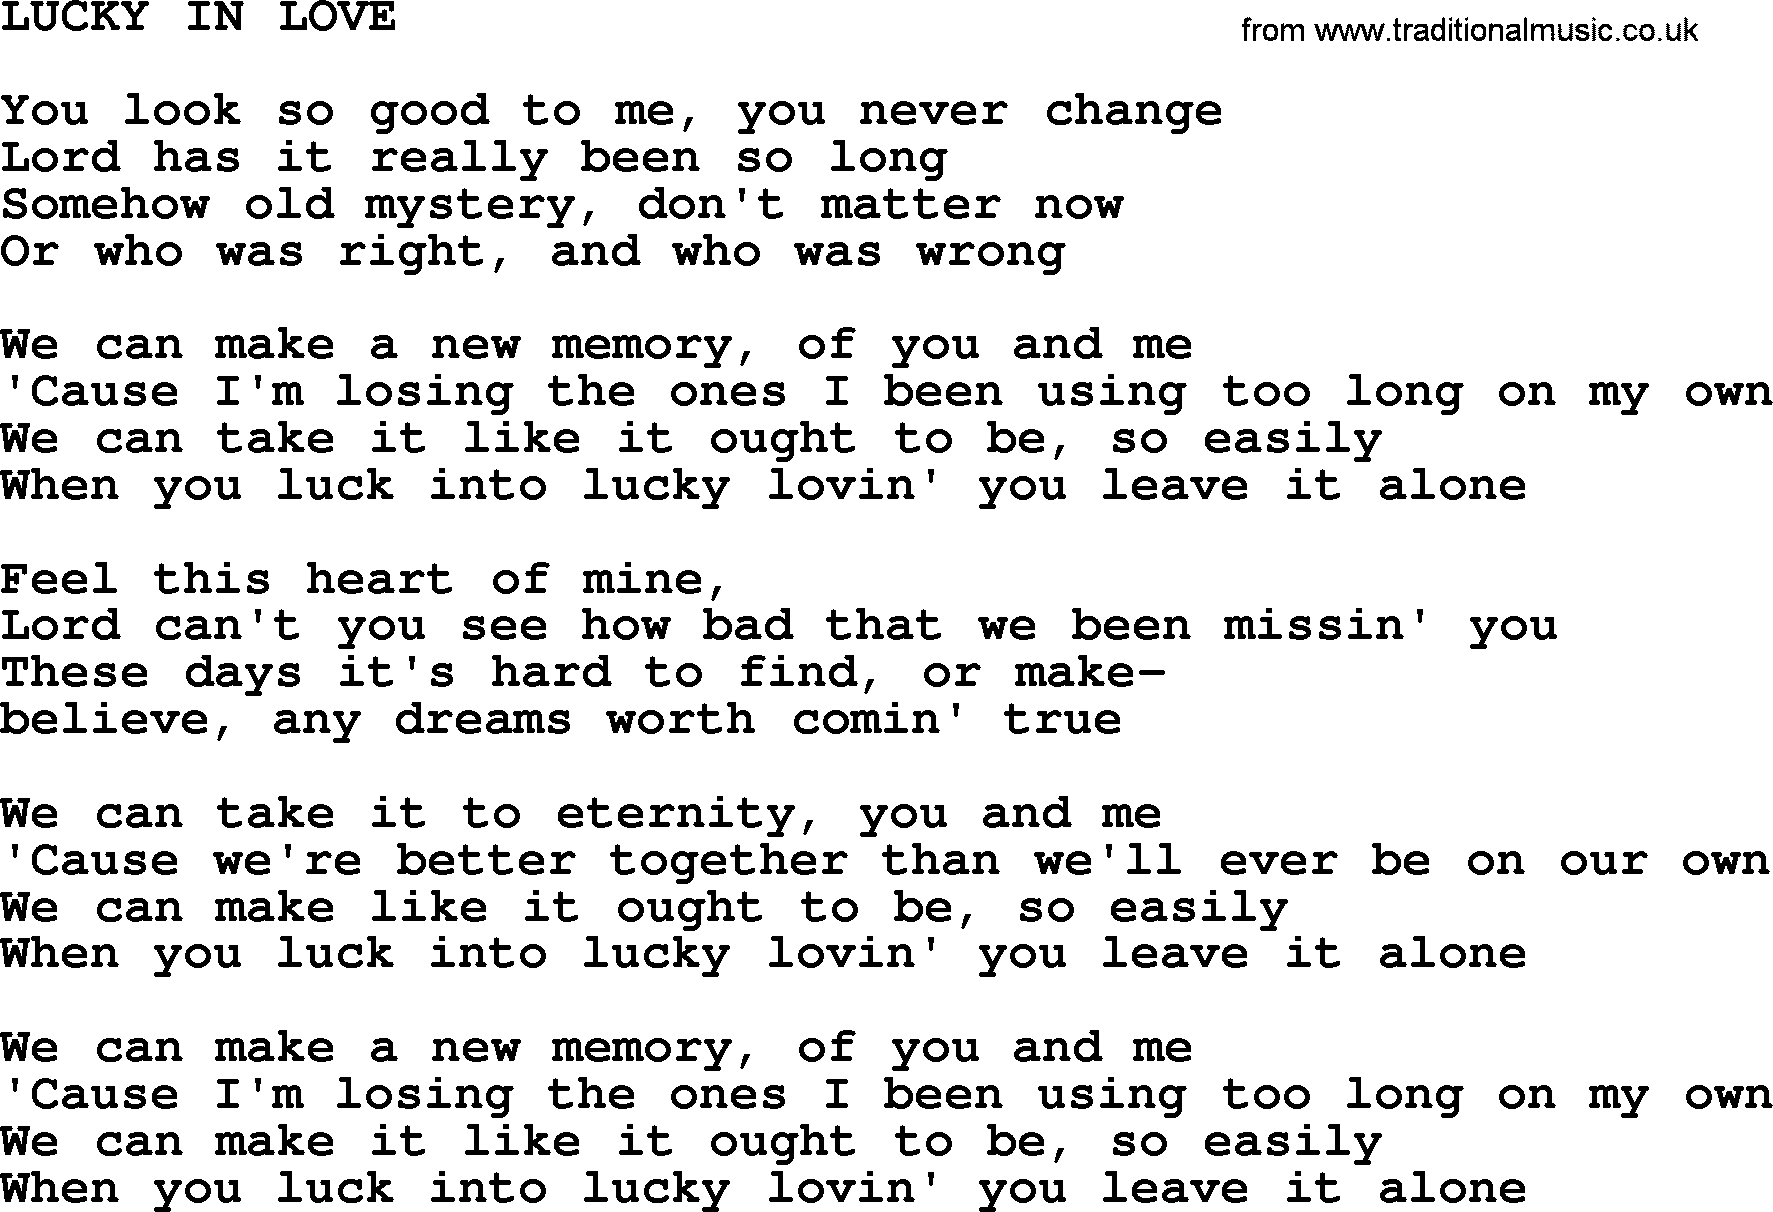 Kris Kristofferson song: Lucky In Love lyrics.